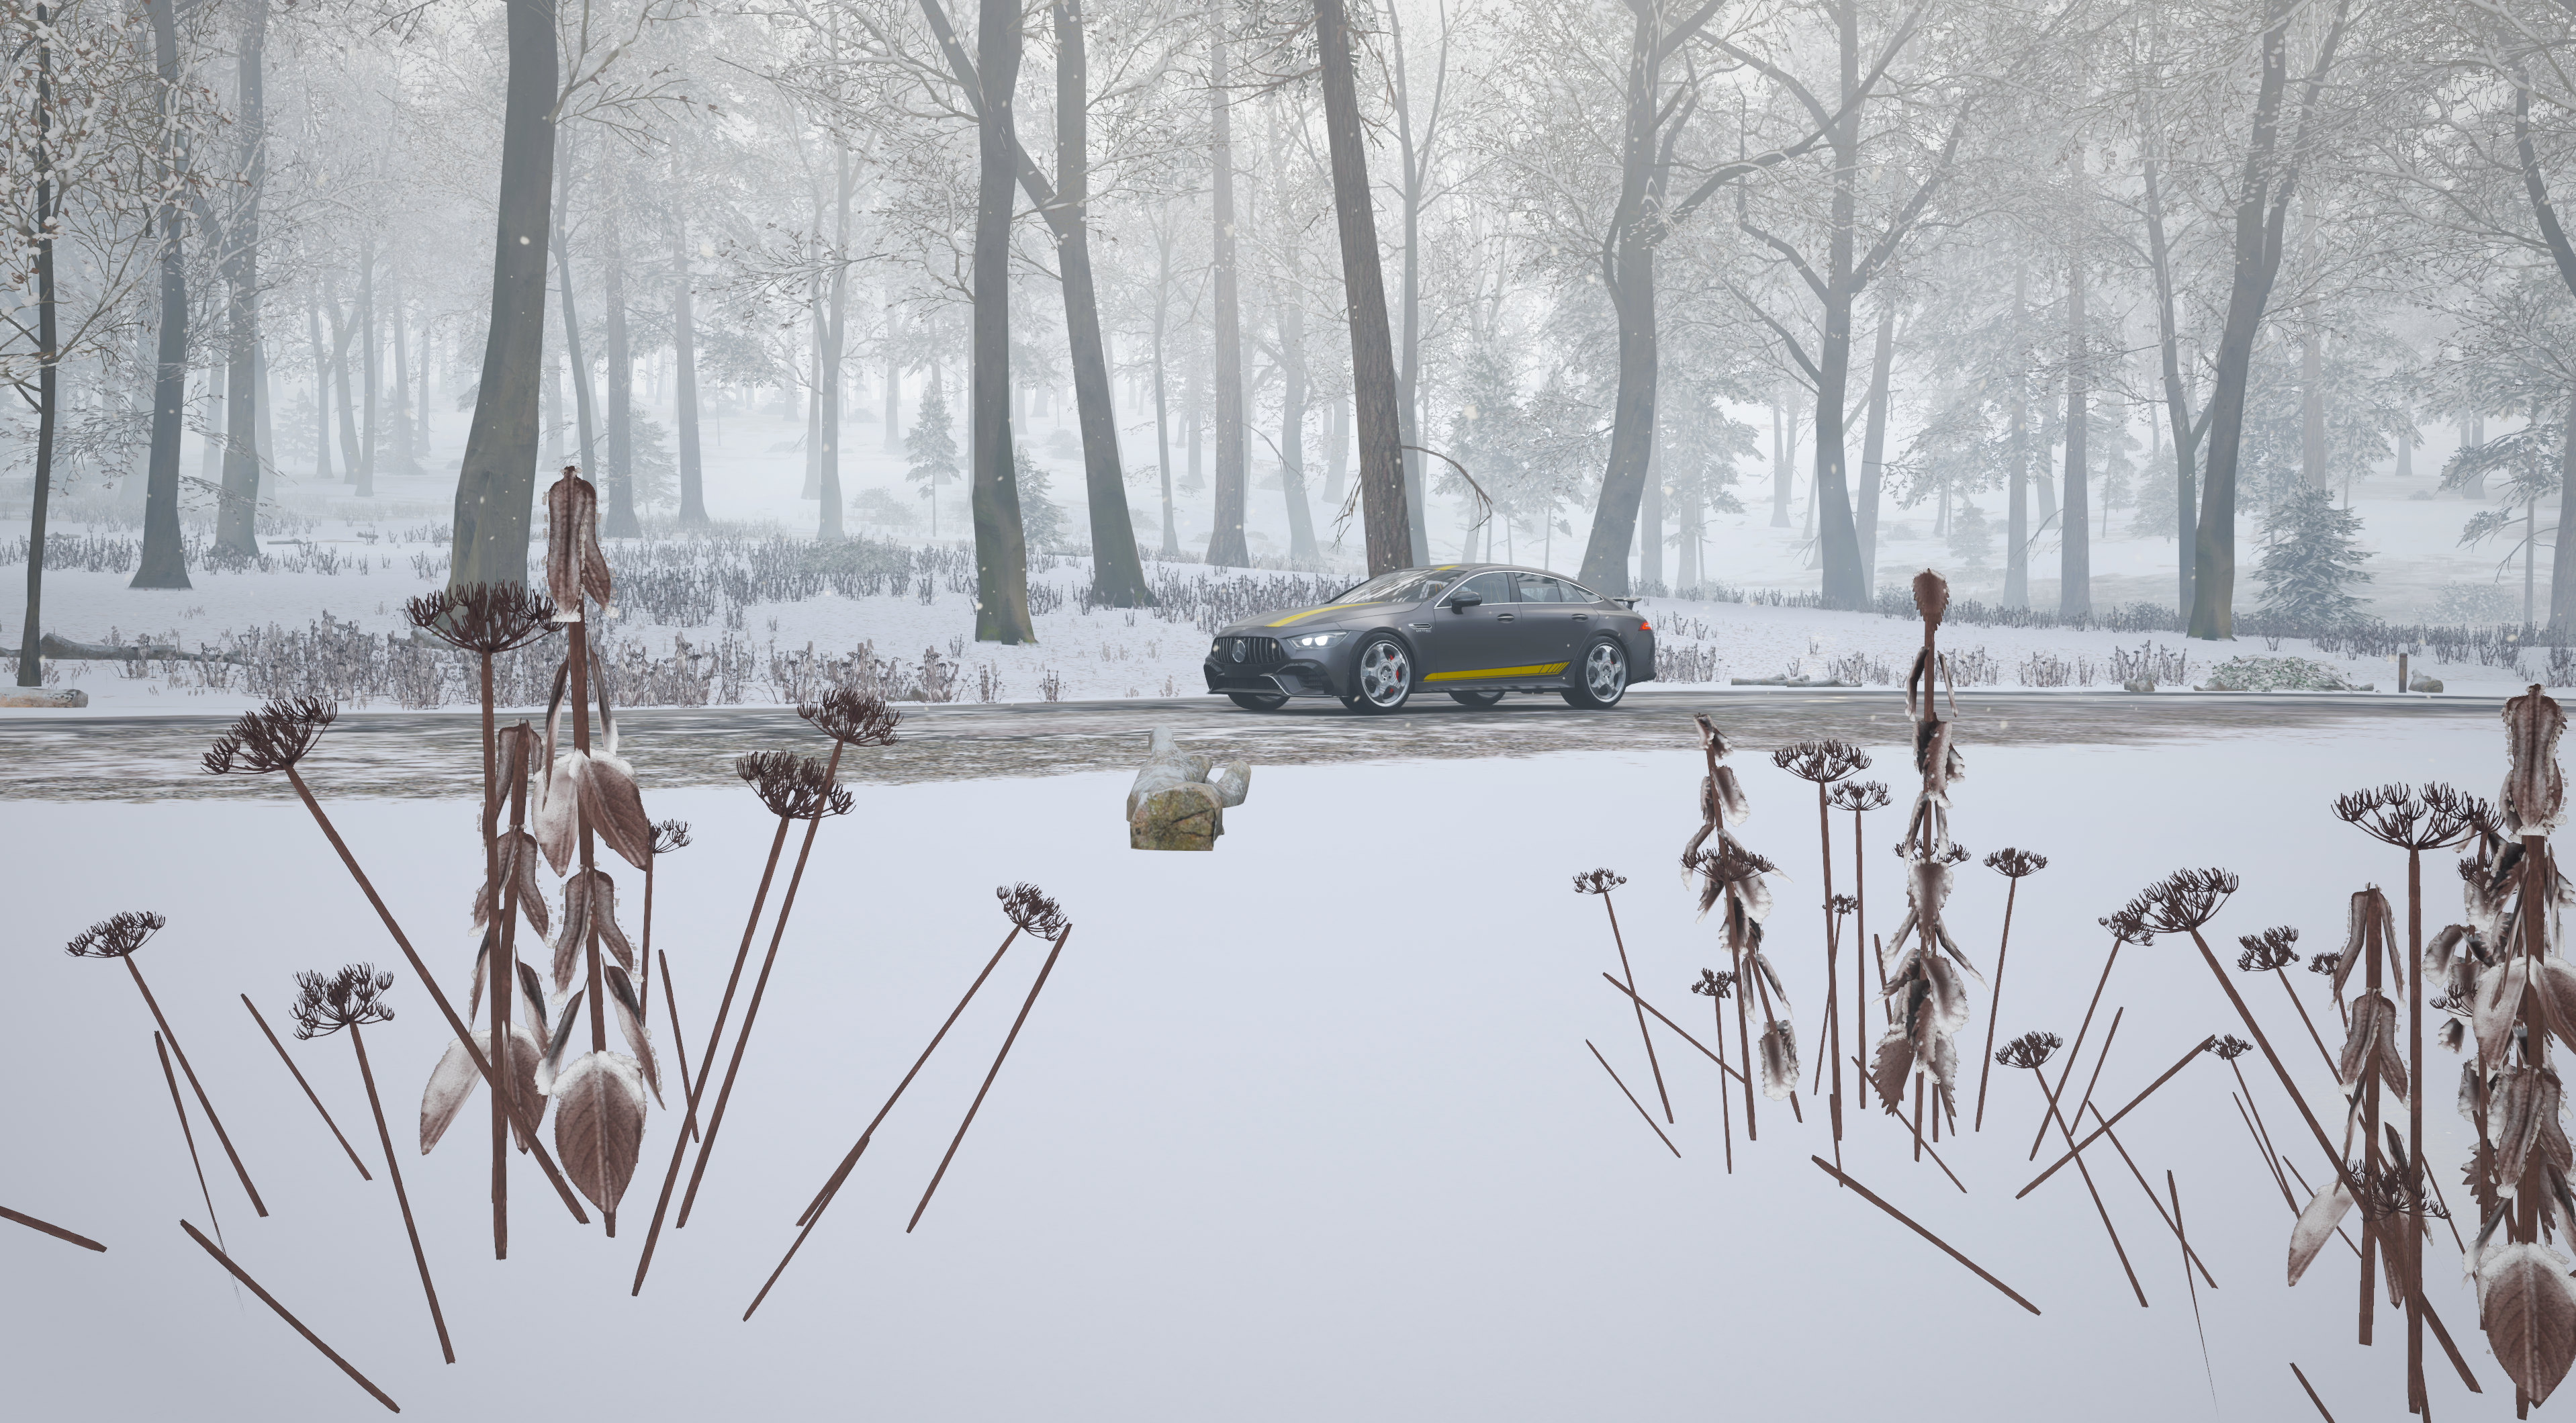 Mercedes Benz GT4 Mercedes AMG Forza Horizon 4 Snow Wood 3836x2119